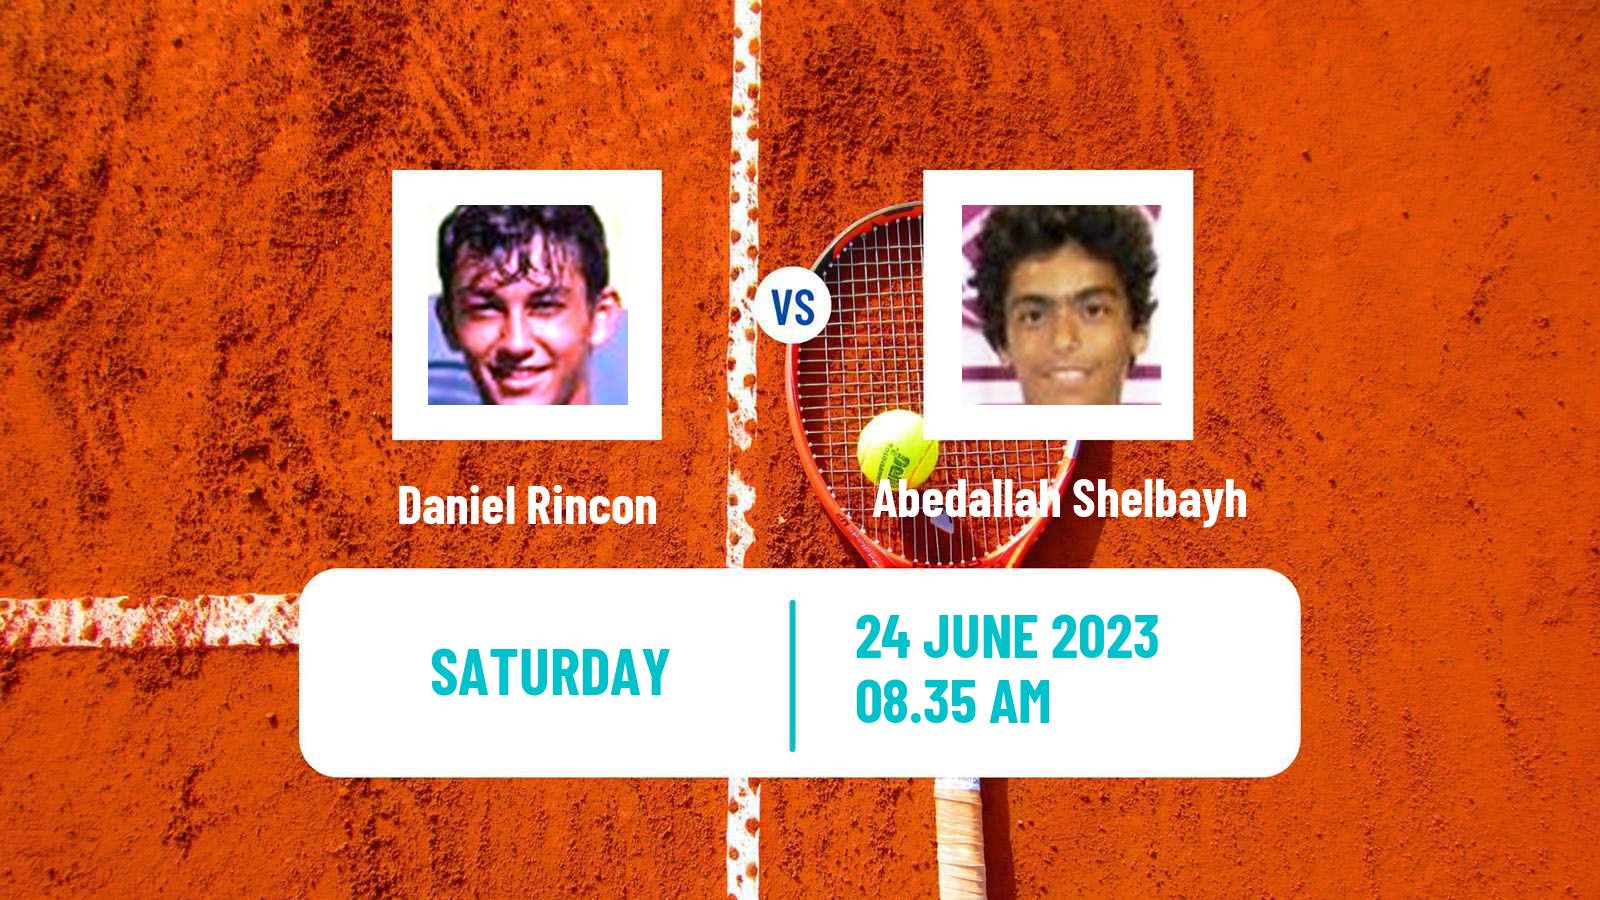 Tennis ATP Mallorca Daniel Rincon - Abedallah Shelbayh